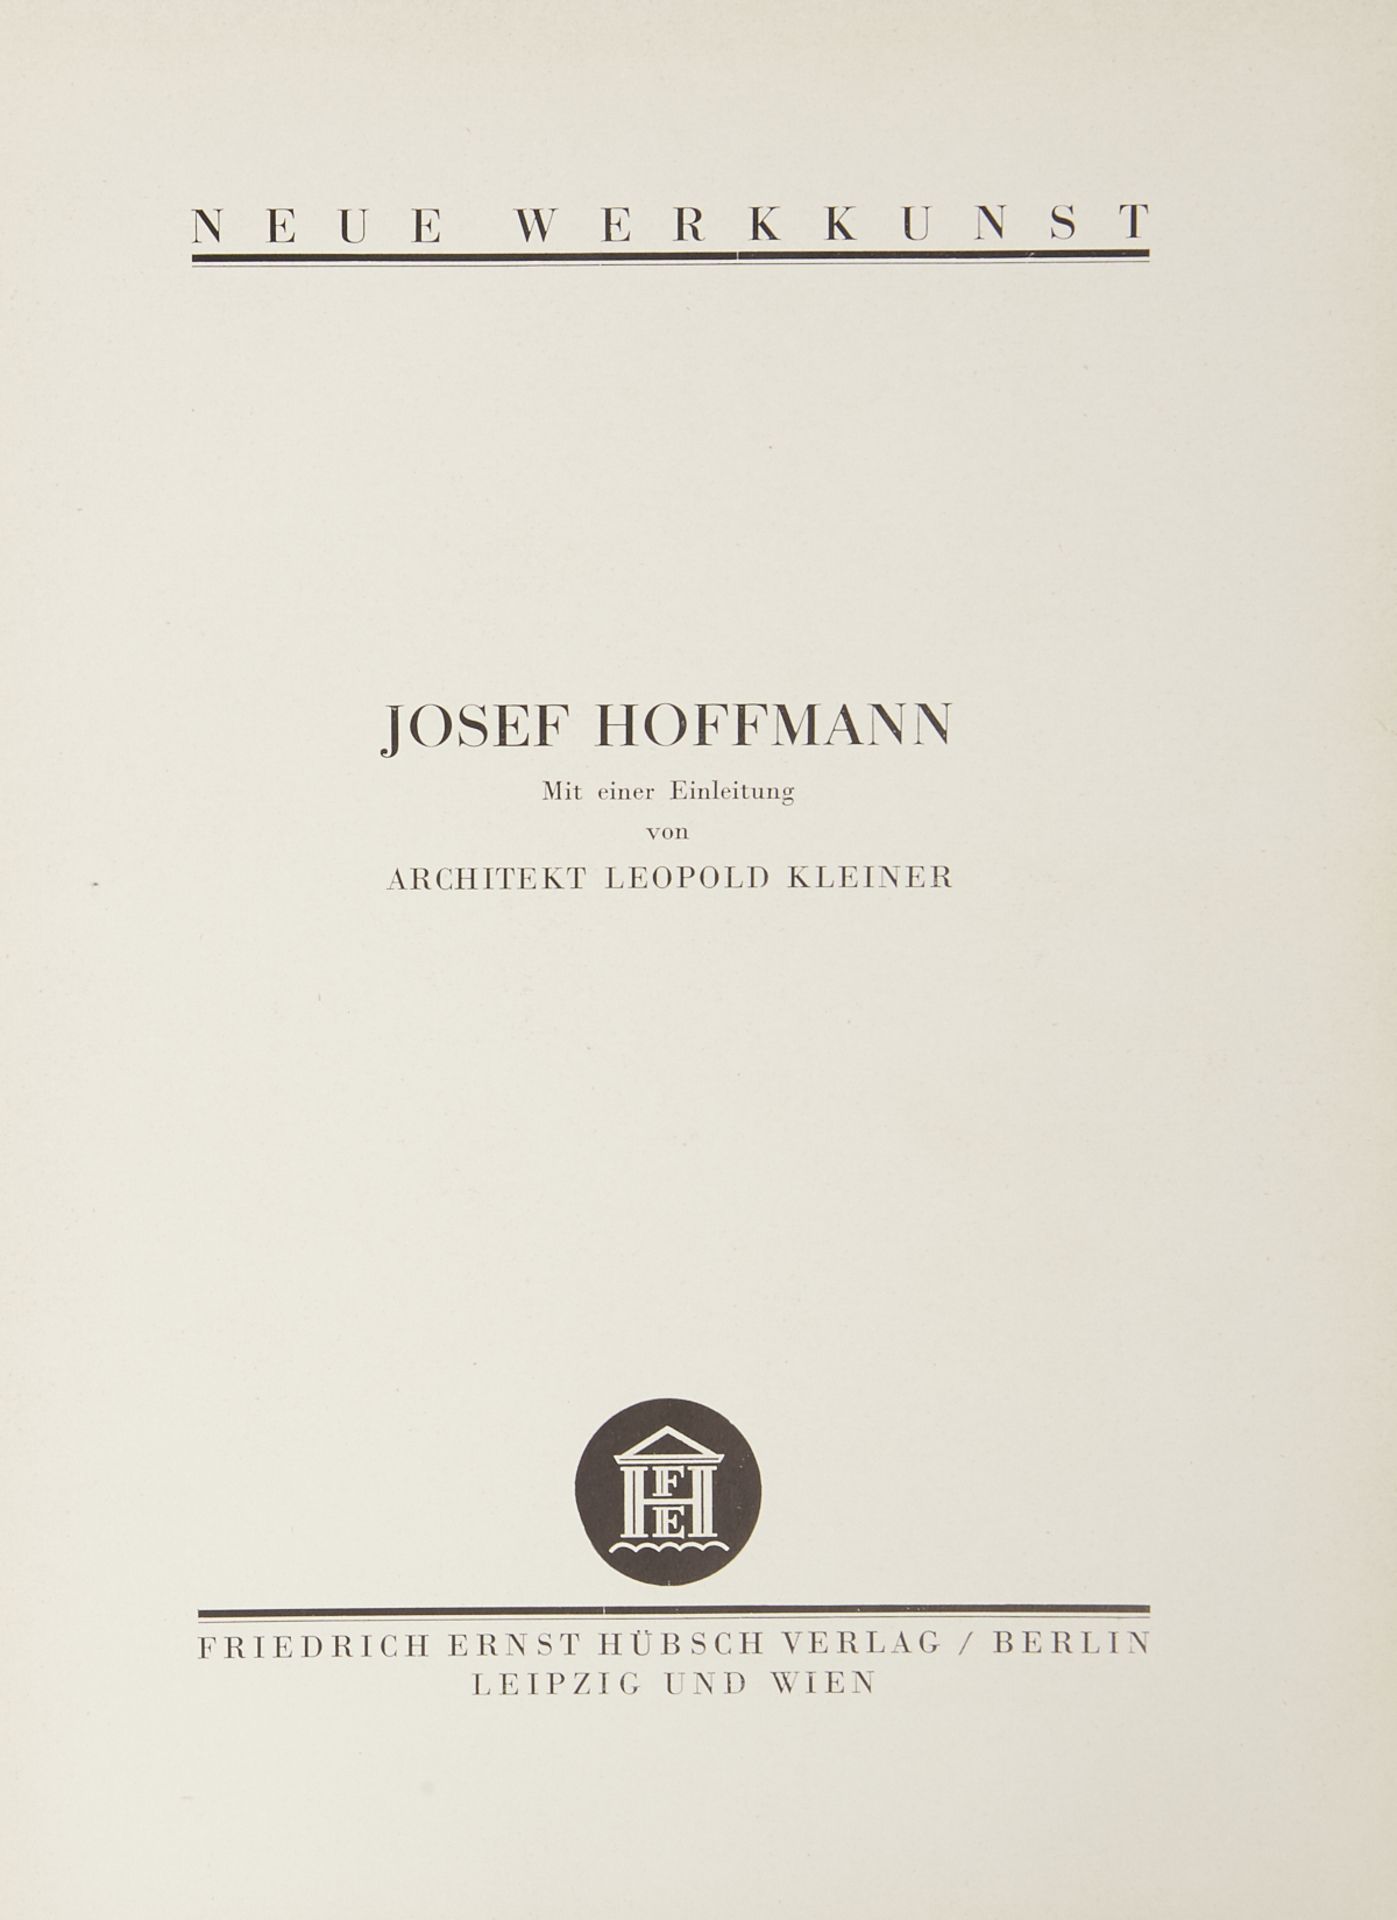 Grp: Writings on the Works of Josef Hoffman - Image 2 of 6